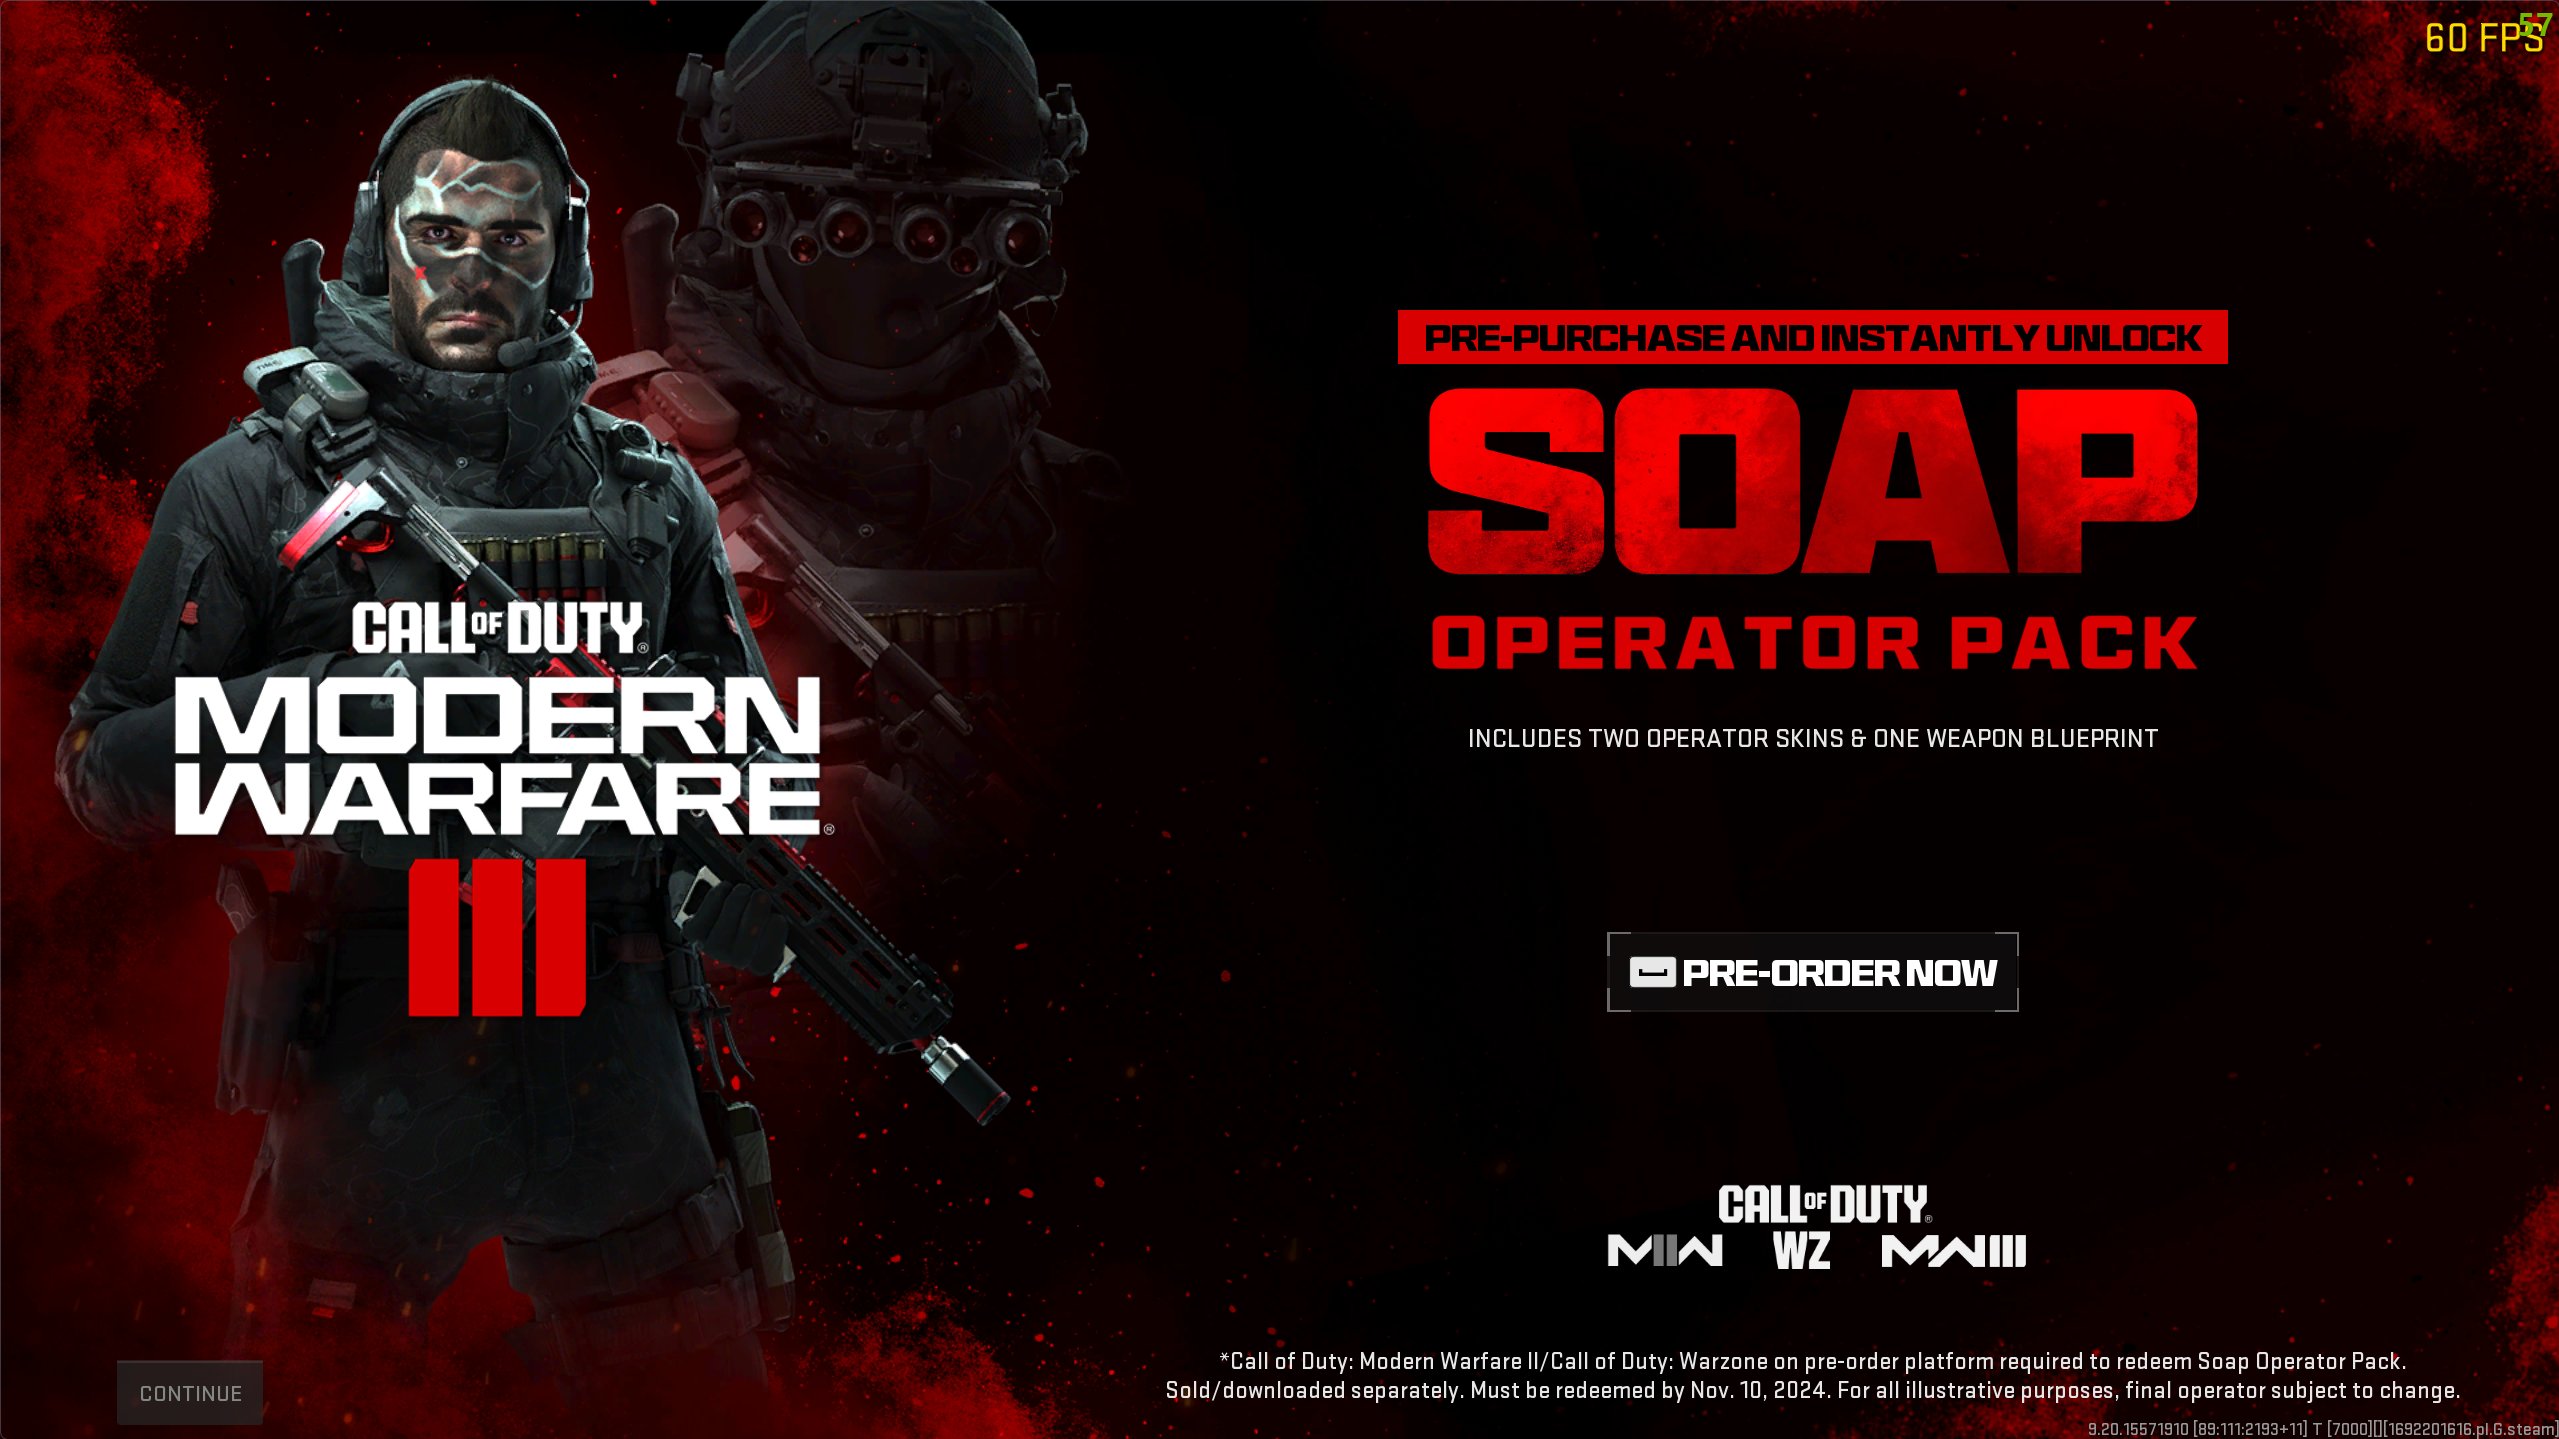 Call of Duty: Modern Warfare 3 gets a single-player campaign trailer